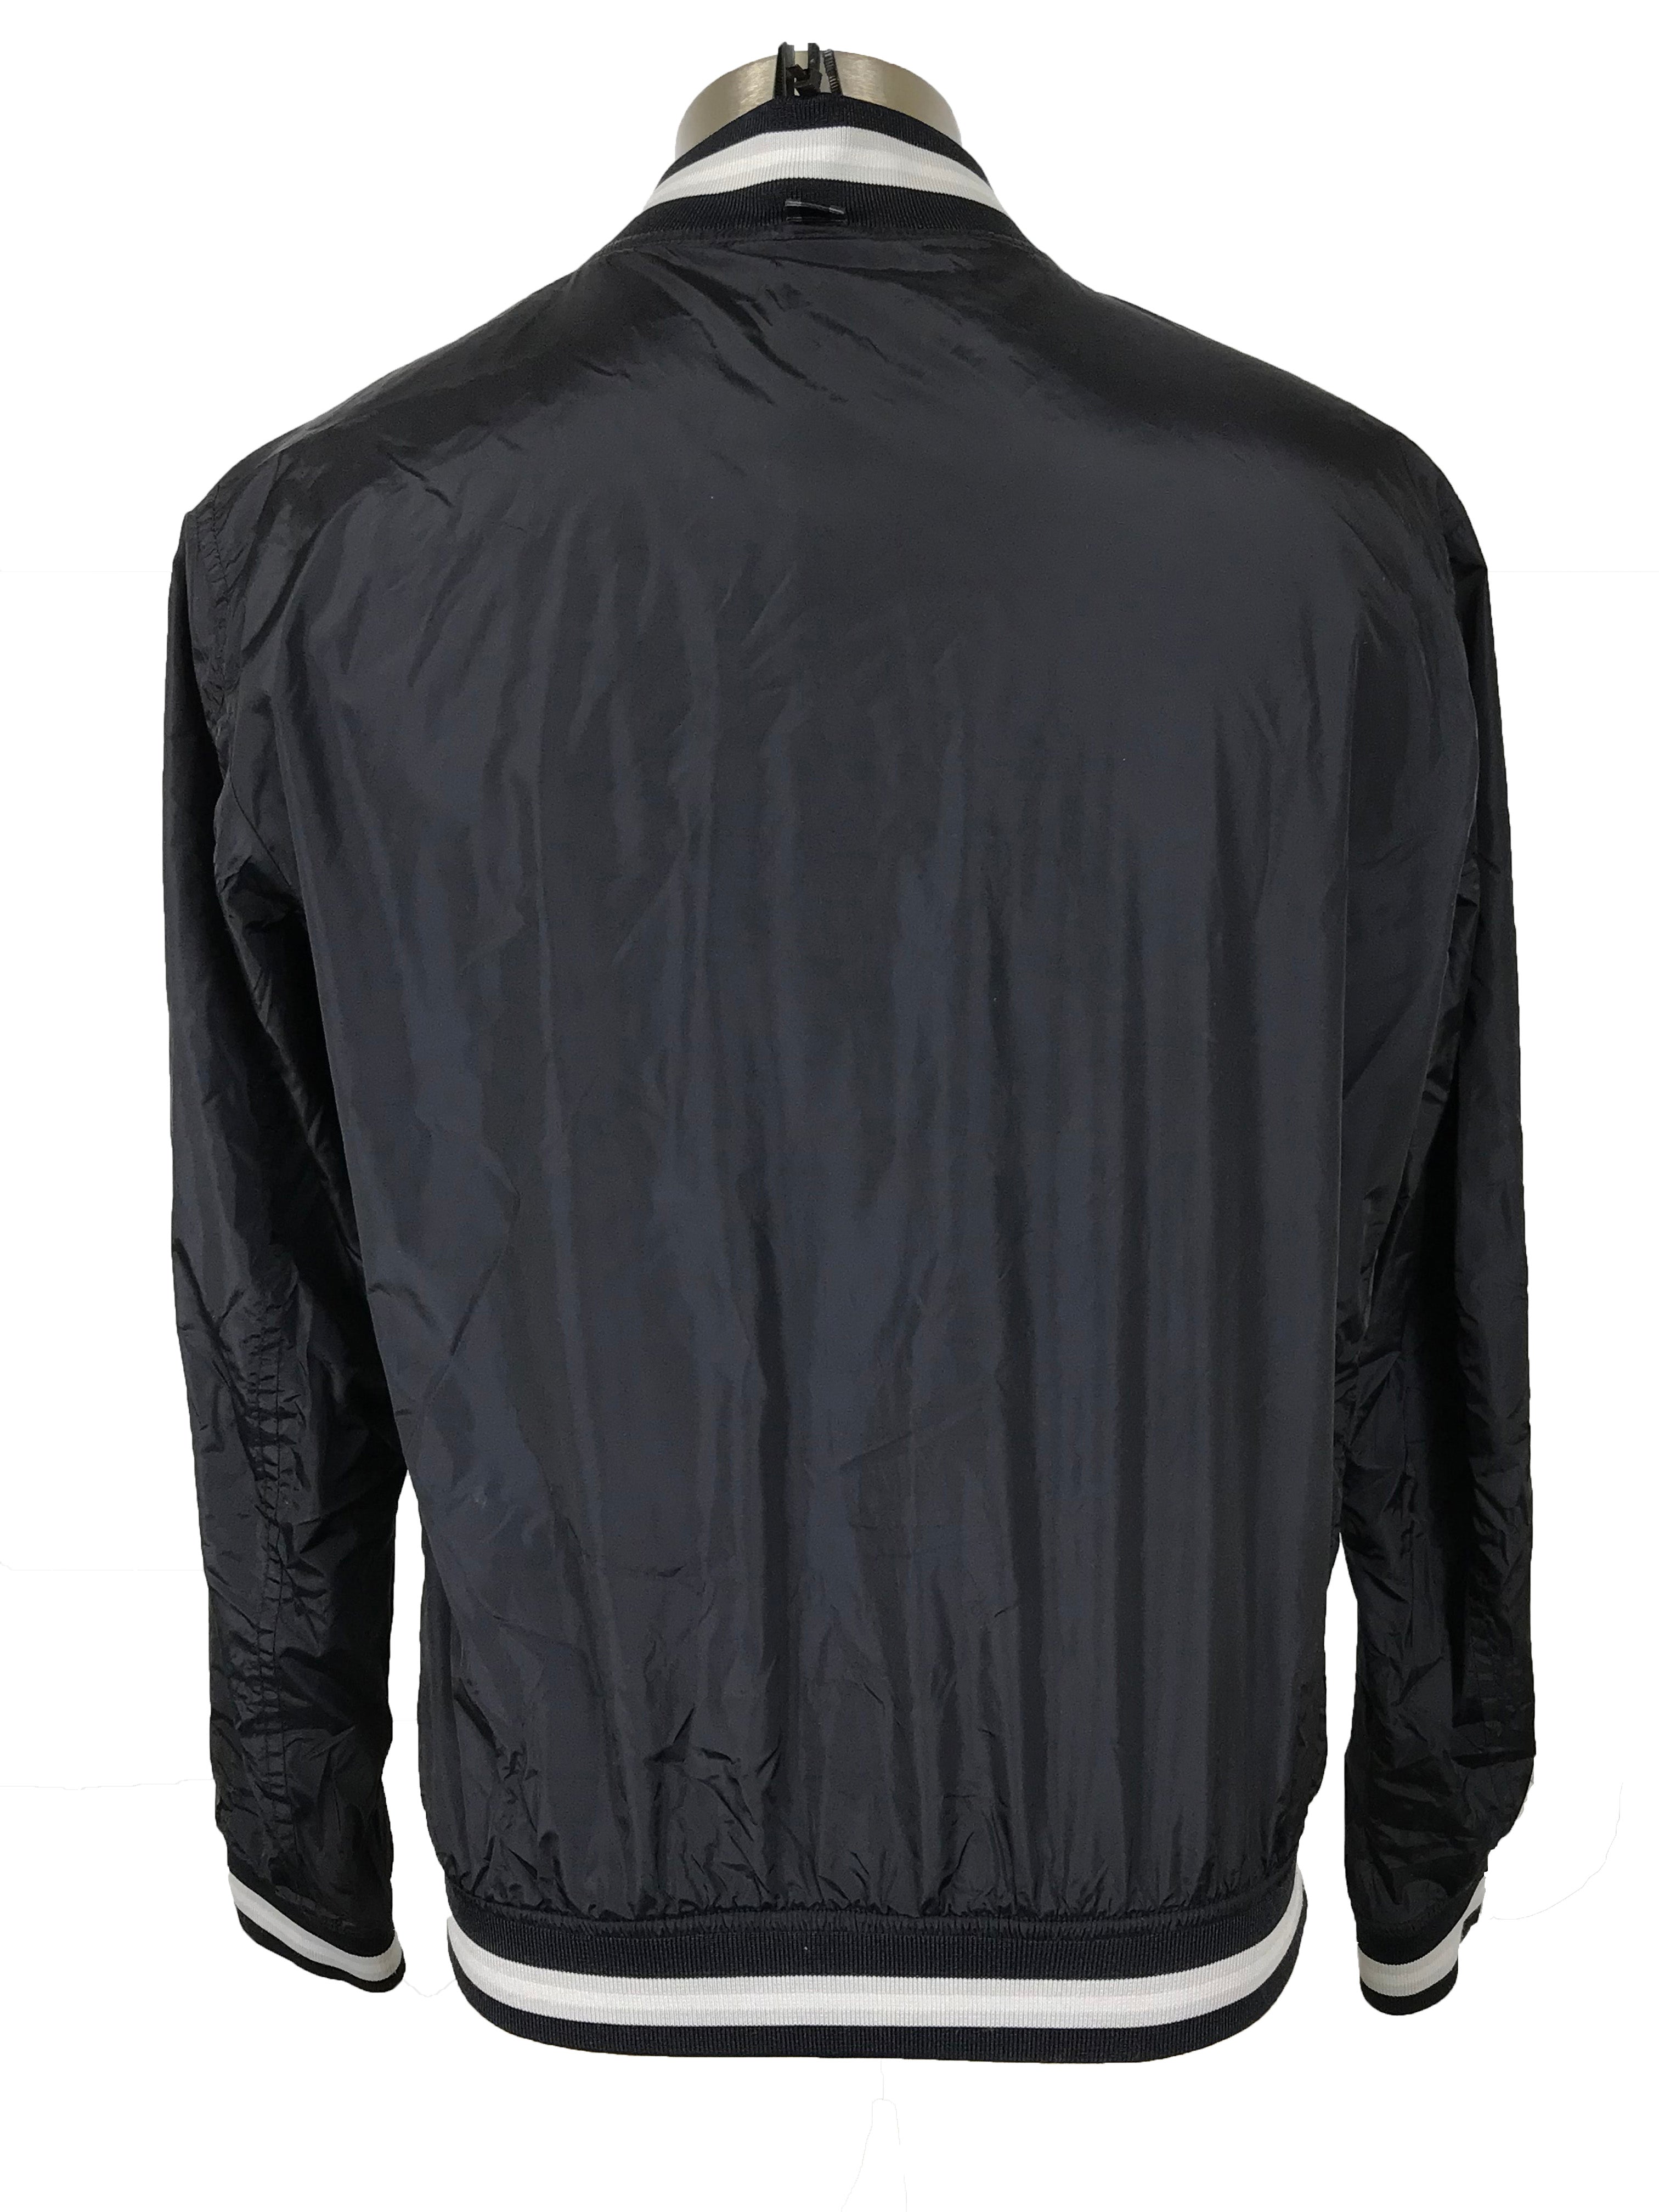 Hugo Boss Black Varsity Jacket Men's Size 38R